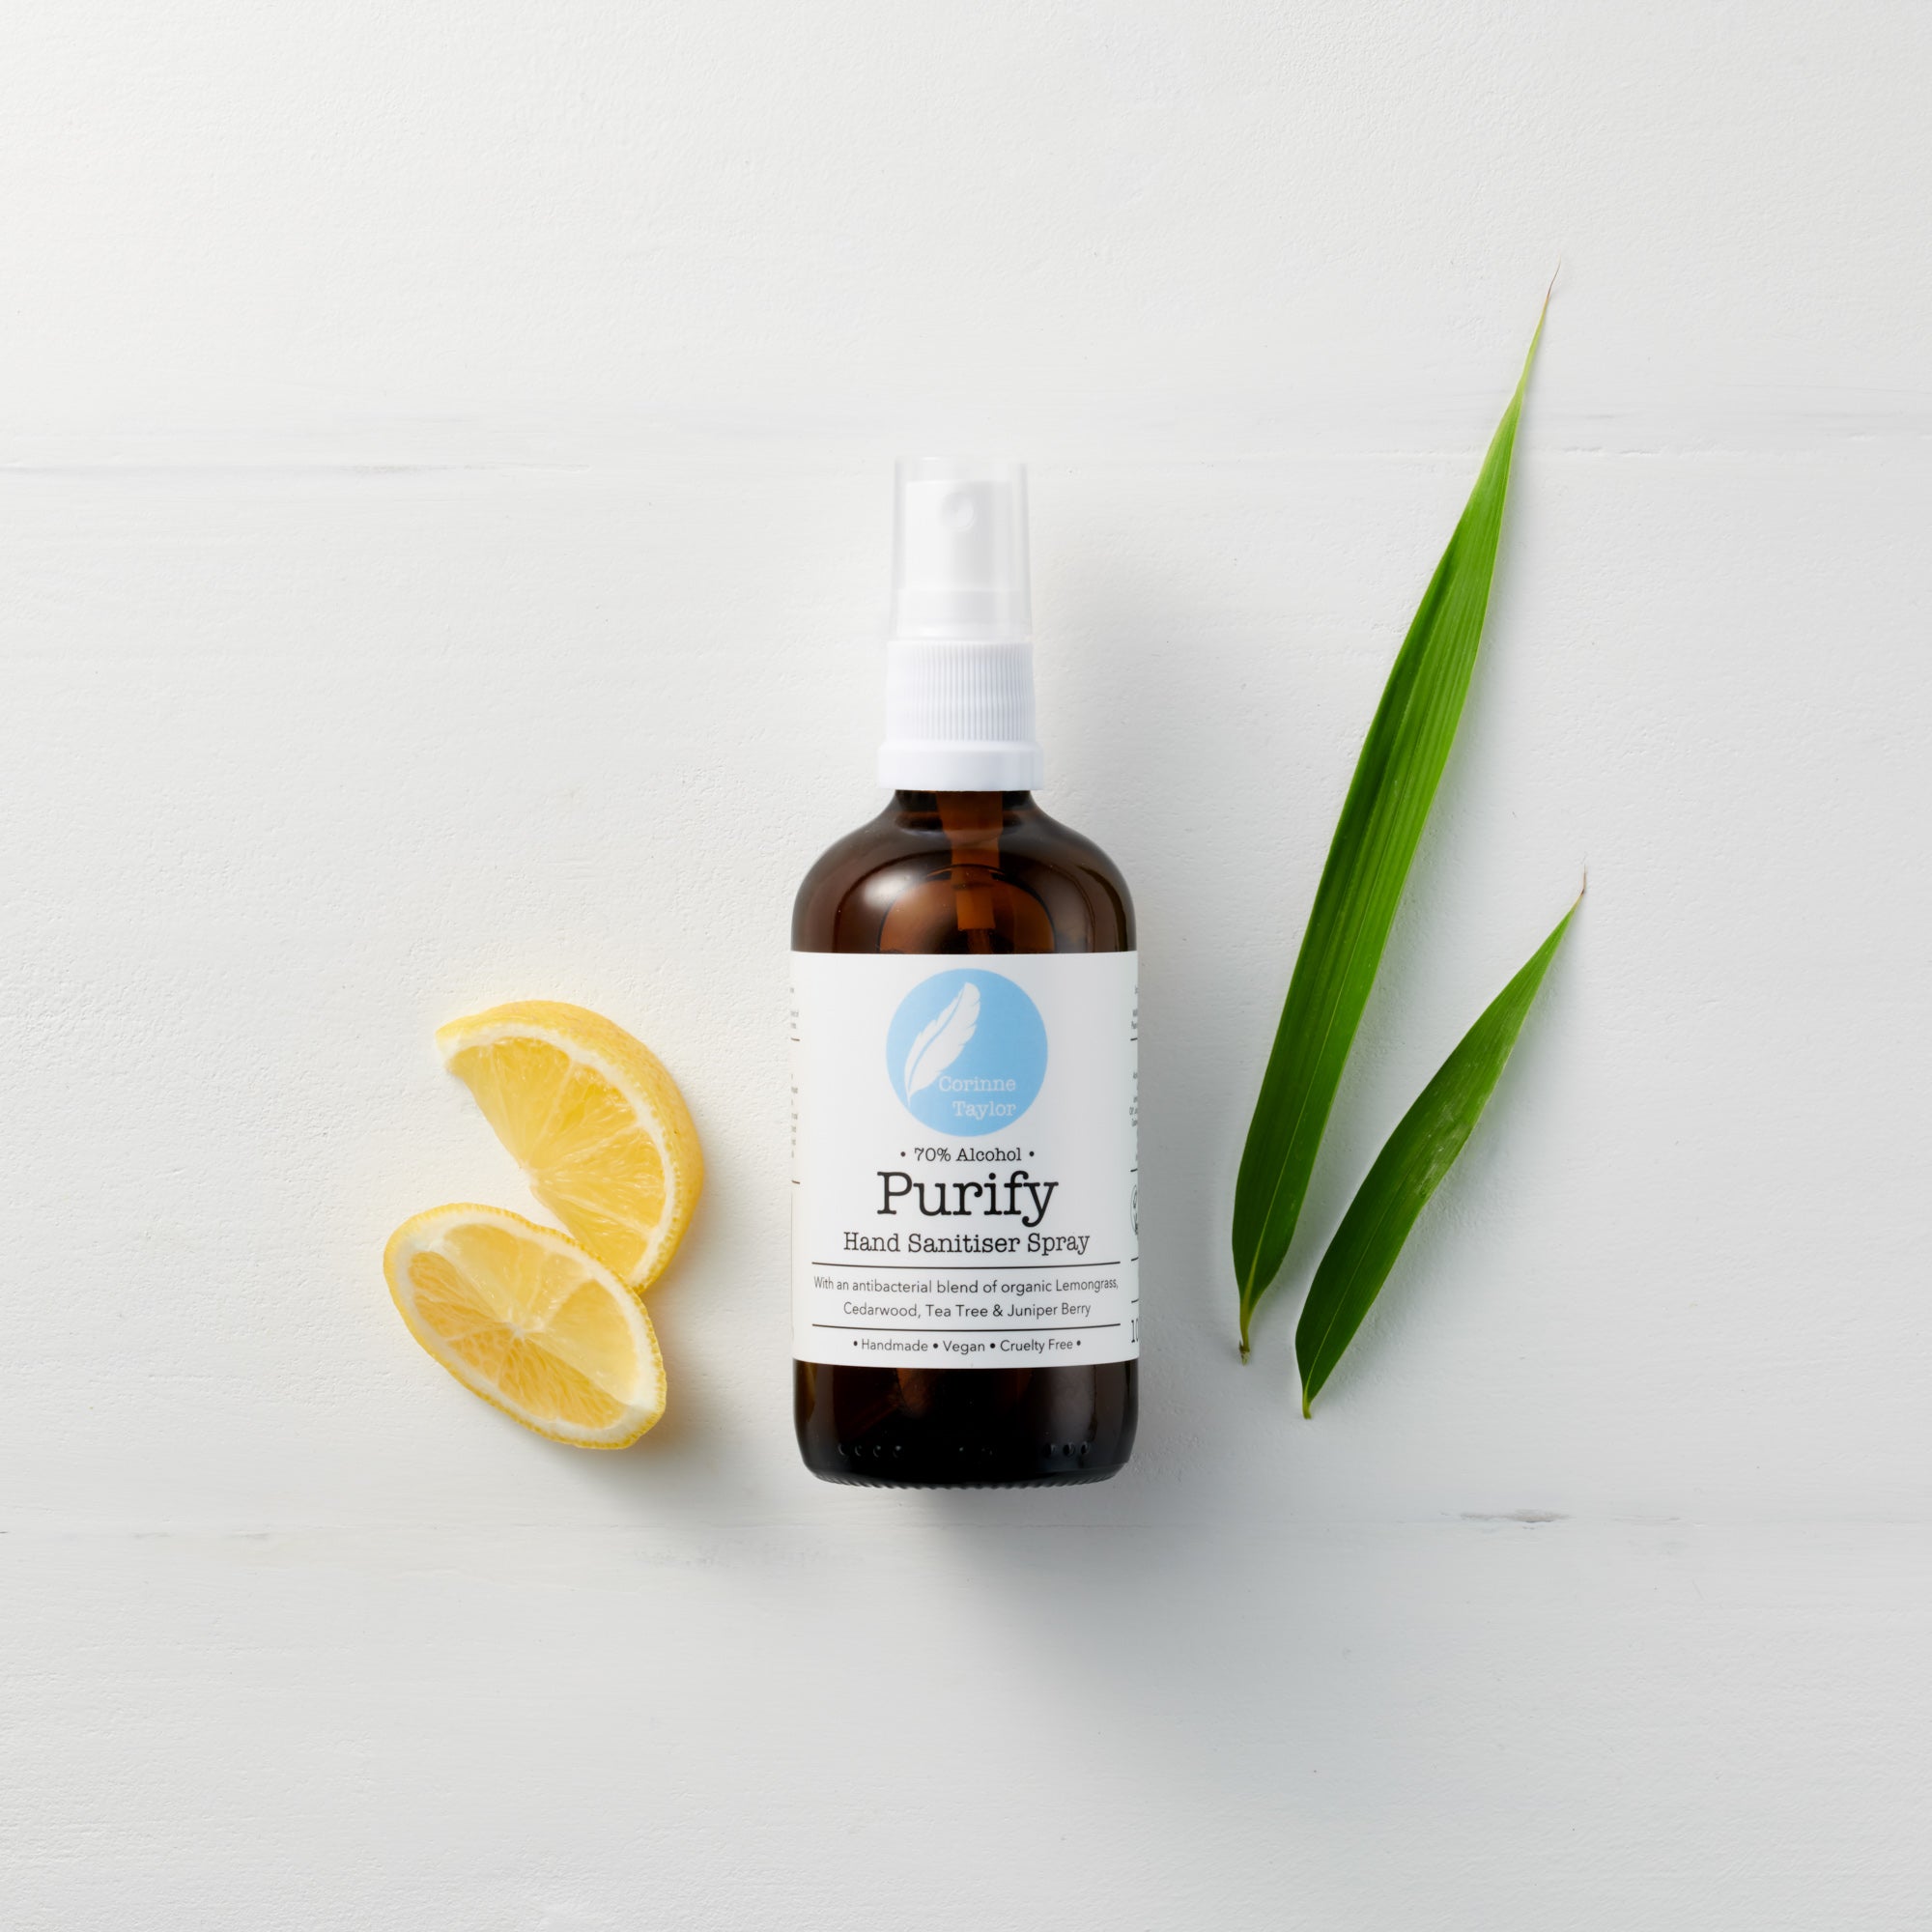 Purify 70% Hand Sanitiser. Organic, vegan, 100% natural, cruelty free, antibacterial essential oils. 